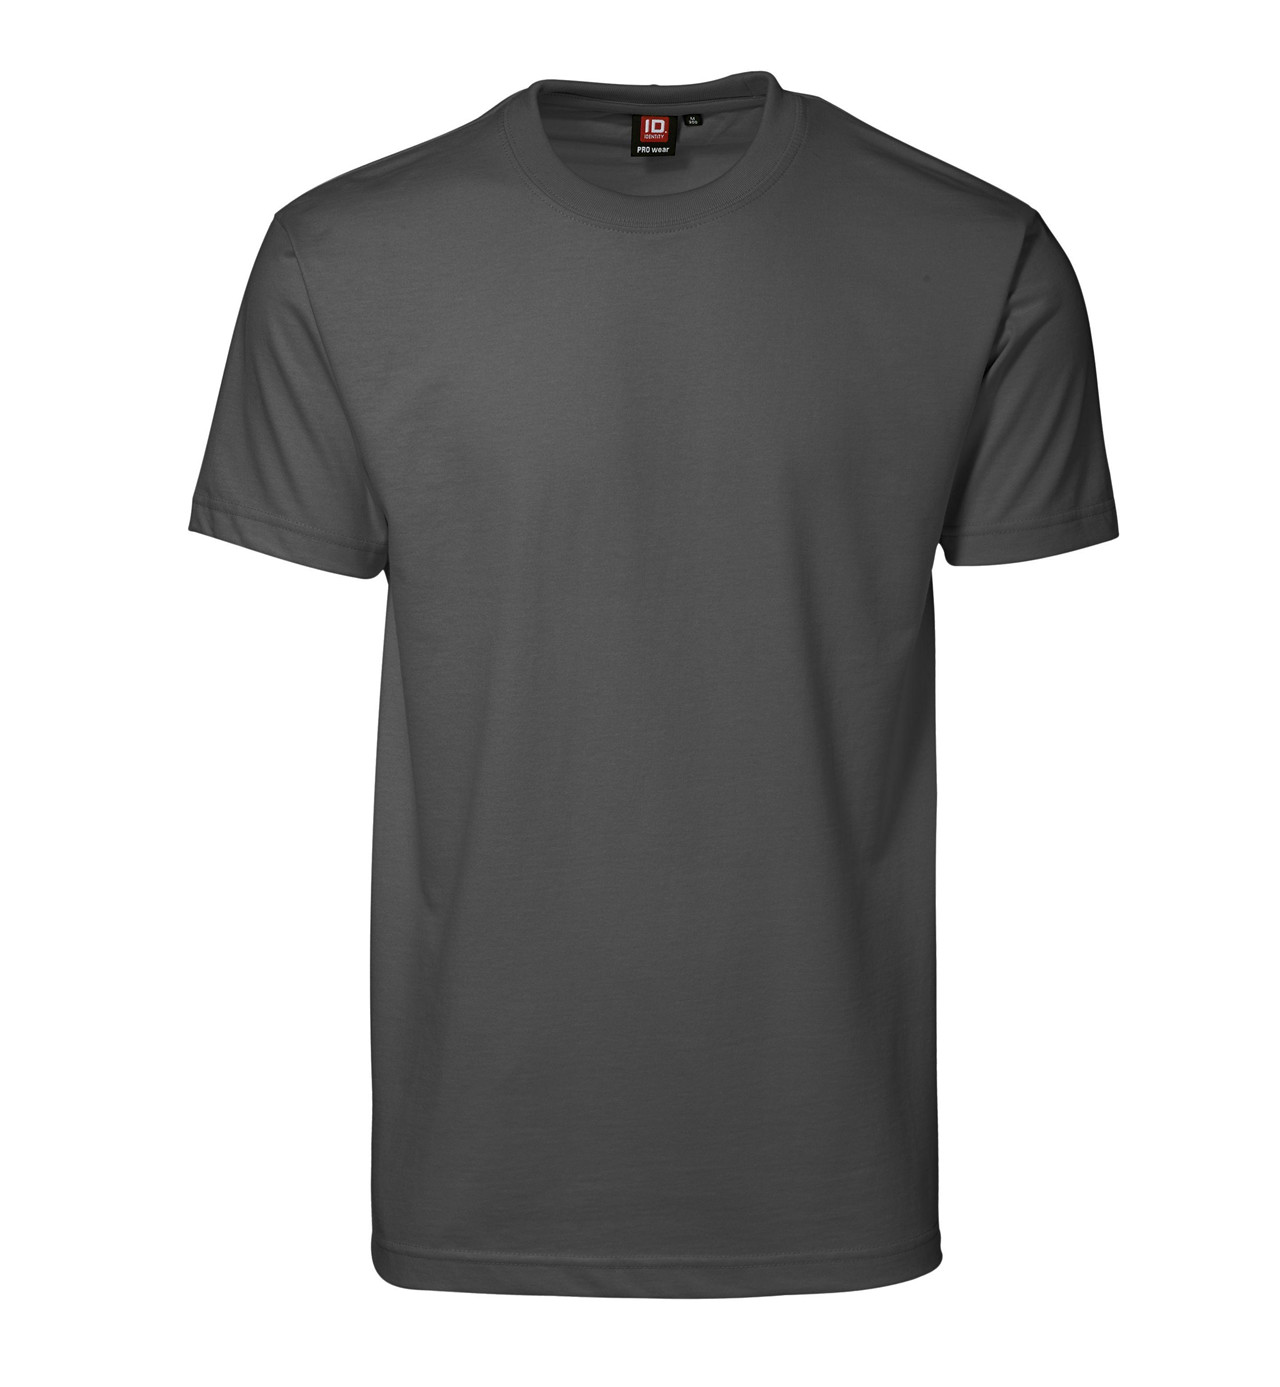 ID PRO Wear T-shirt til Herre (Charcoal, M)